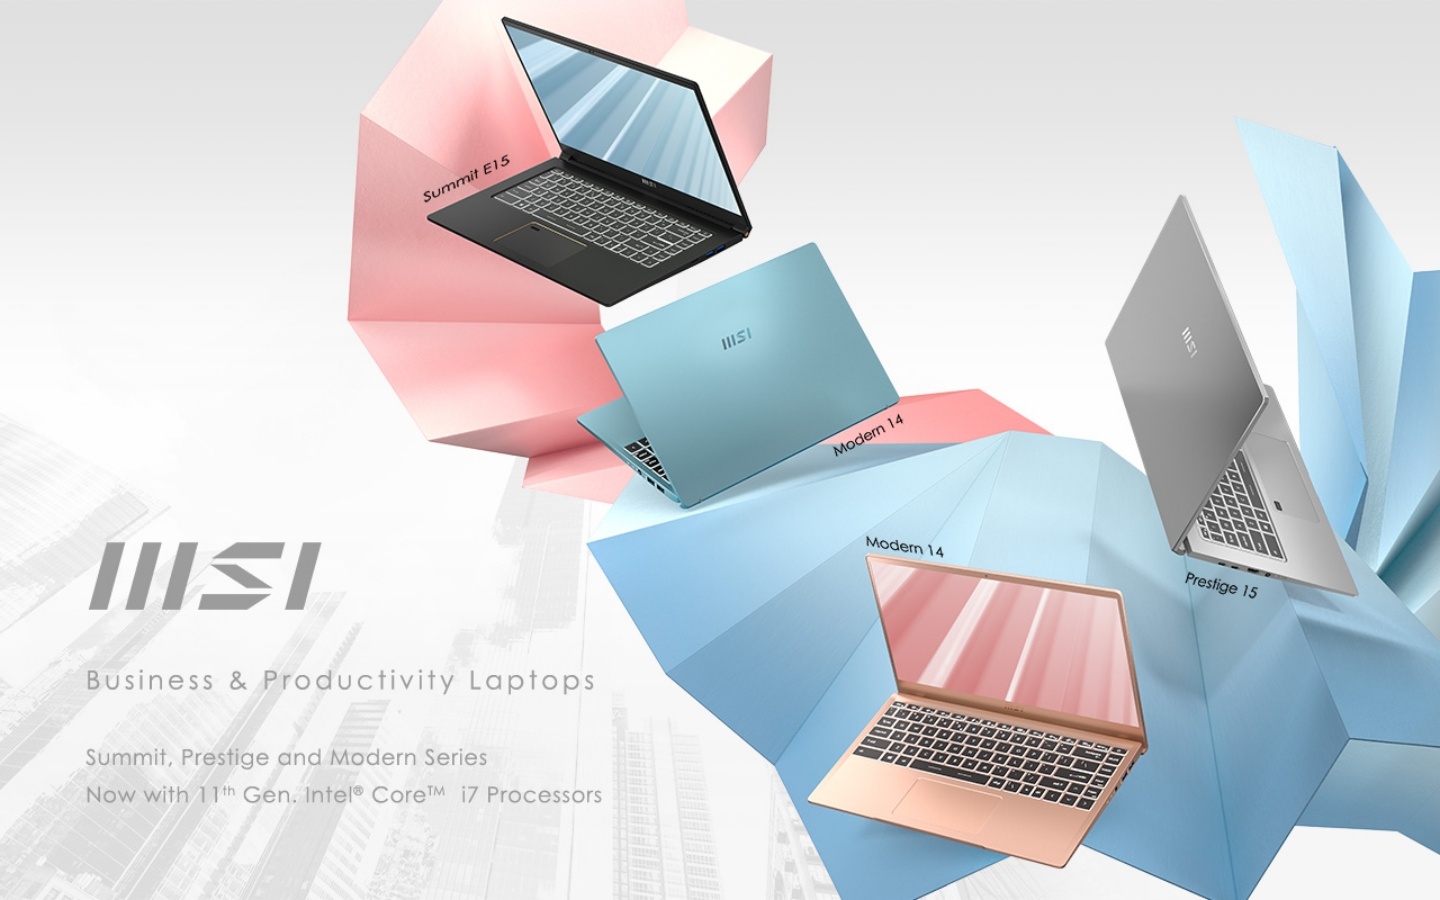 MSI 推出嶄新商務與生產力系列筆電！採用最新 Intel 第 11 代處理器，兼具效能與輕薄質感